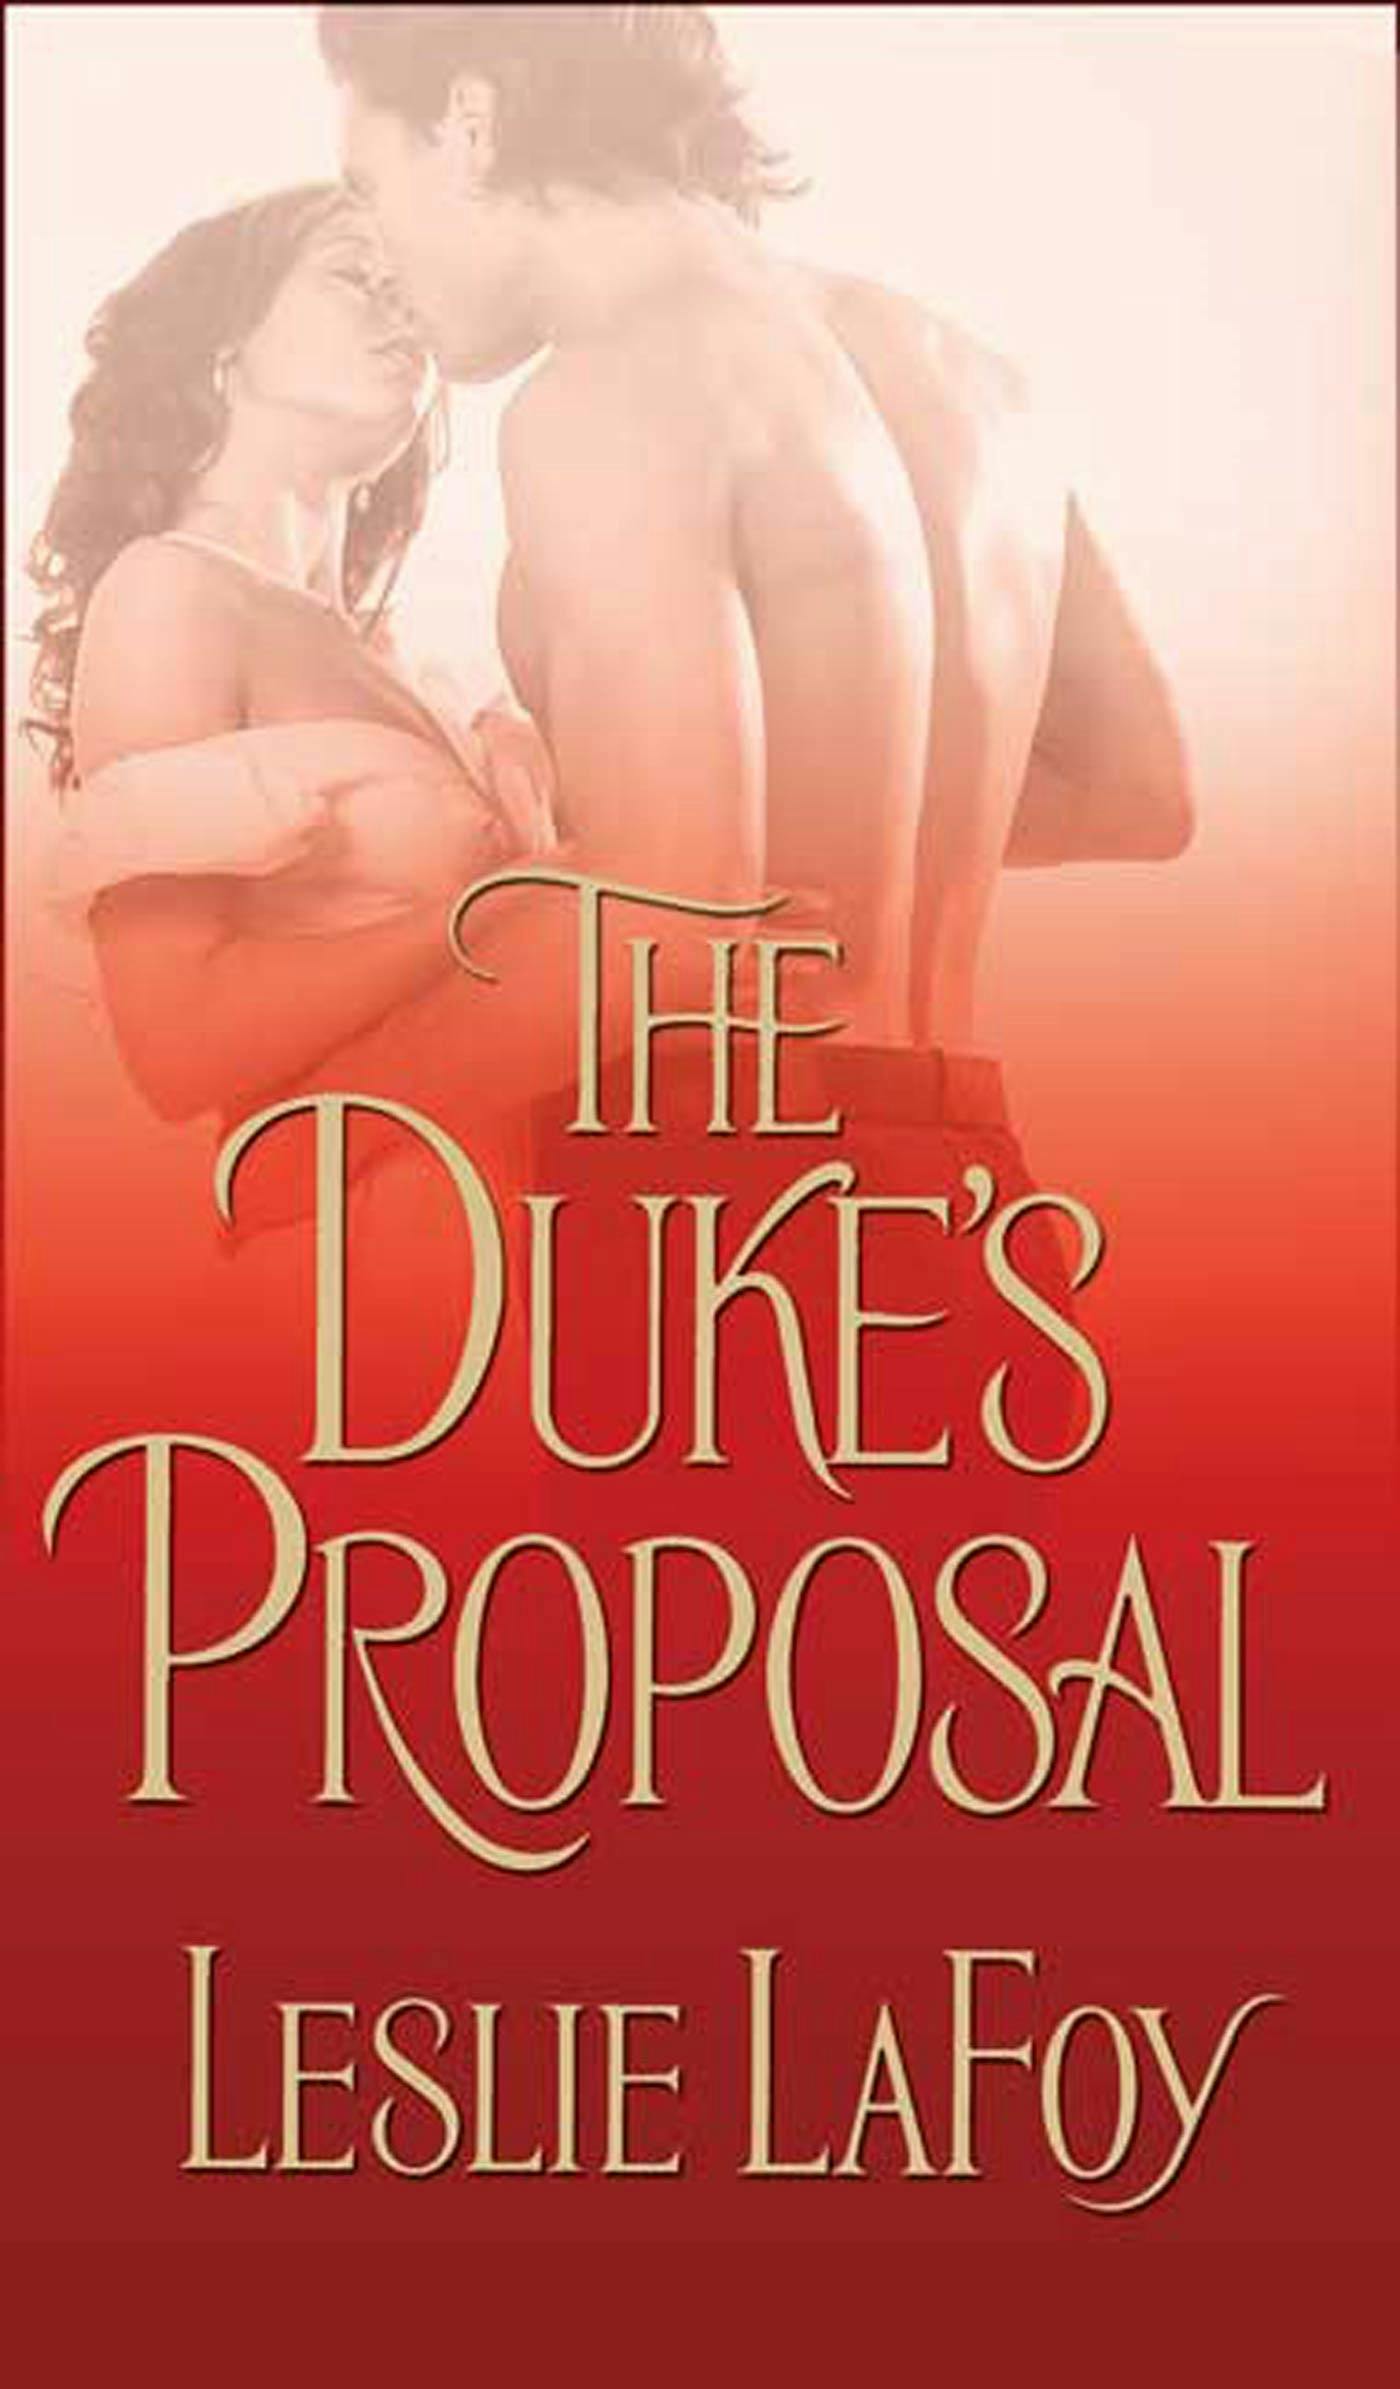 The Duke's Proposal